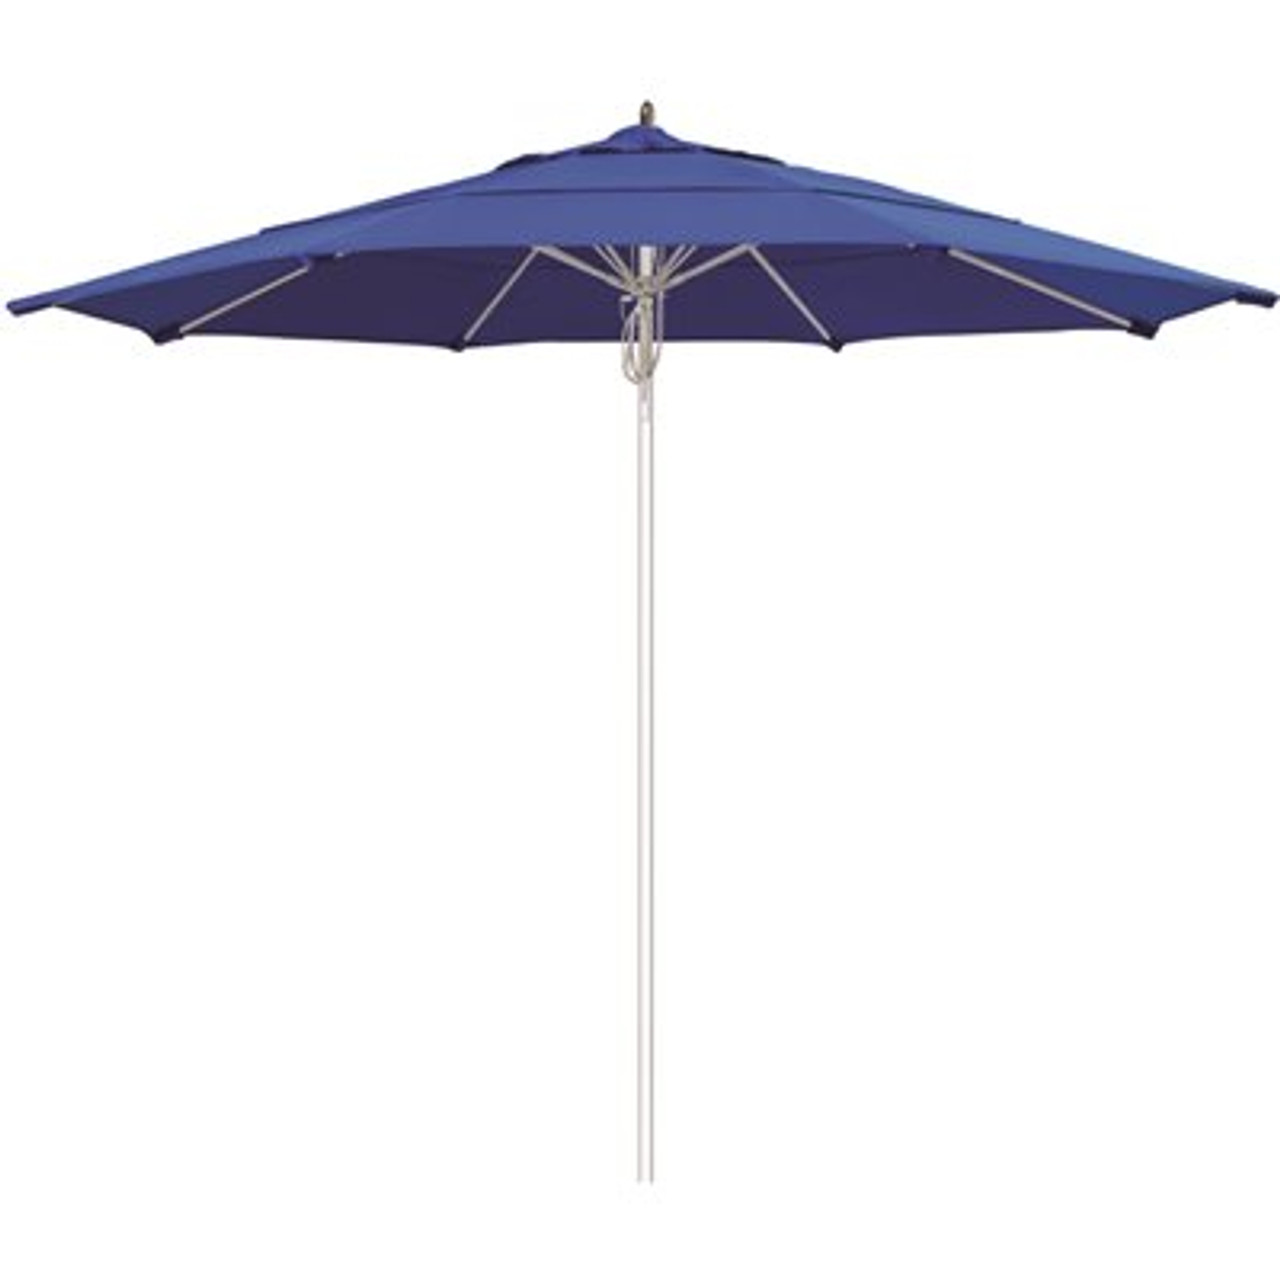 11 ft. Silver Aluminum Commercial Market Patio Umbrella Fiberglass Ribs and Pulley lift in Pacific Blue Sunbrella